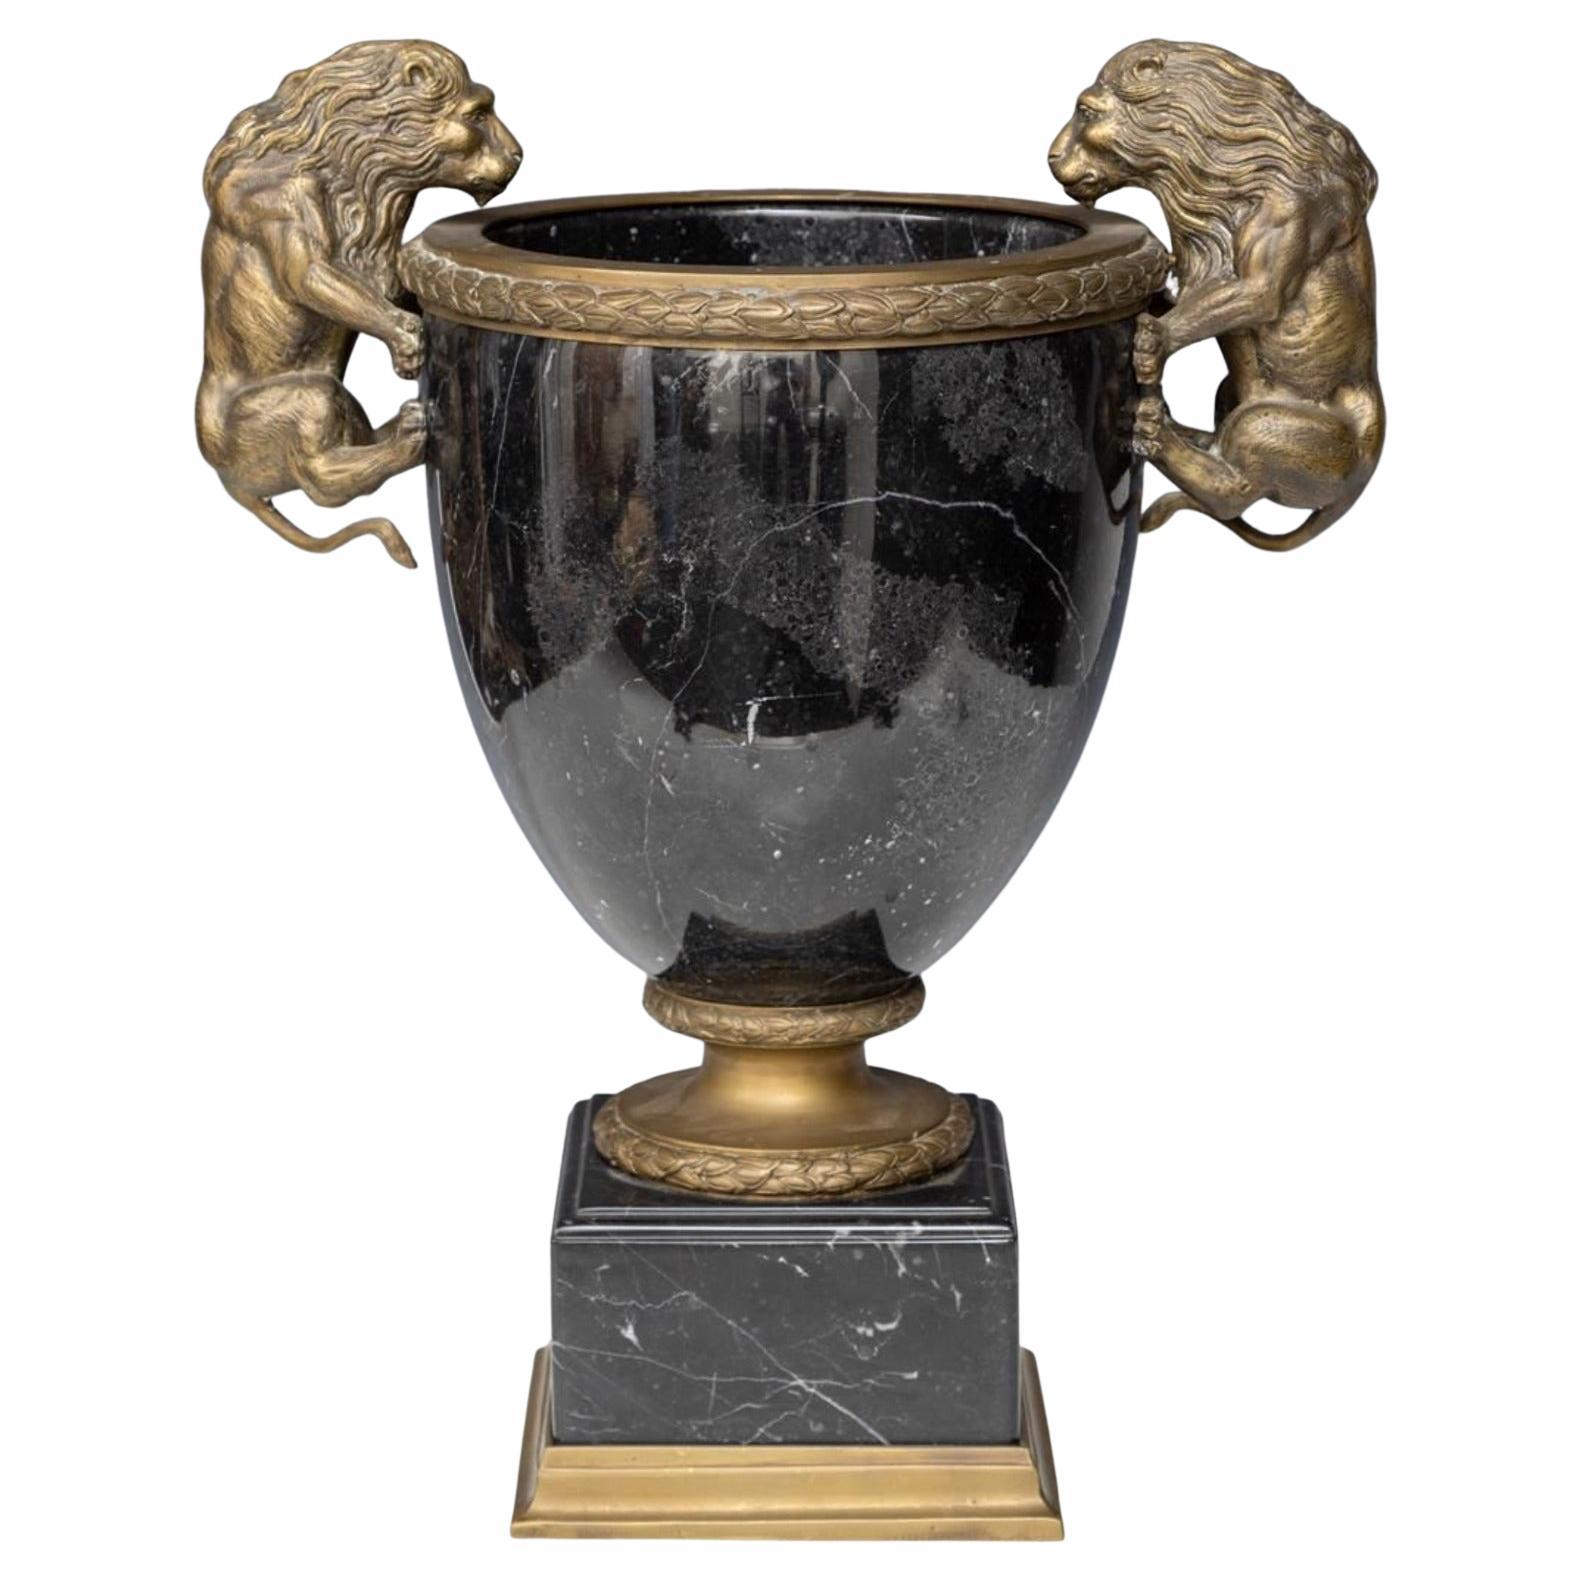 Important Napoleon III Vase, 19th Century